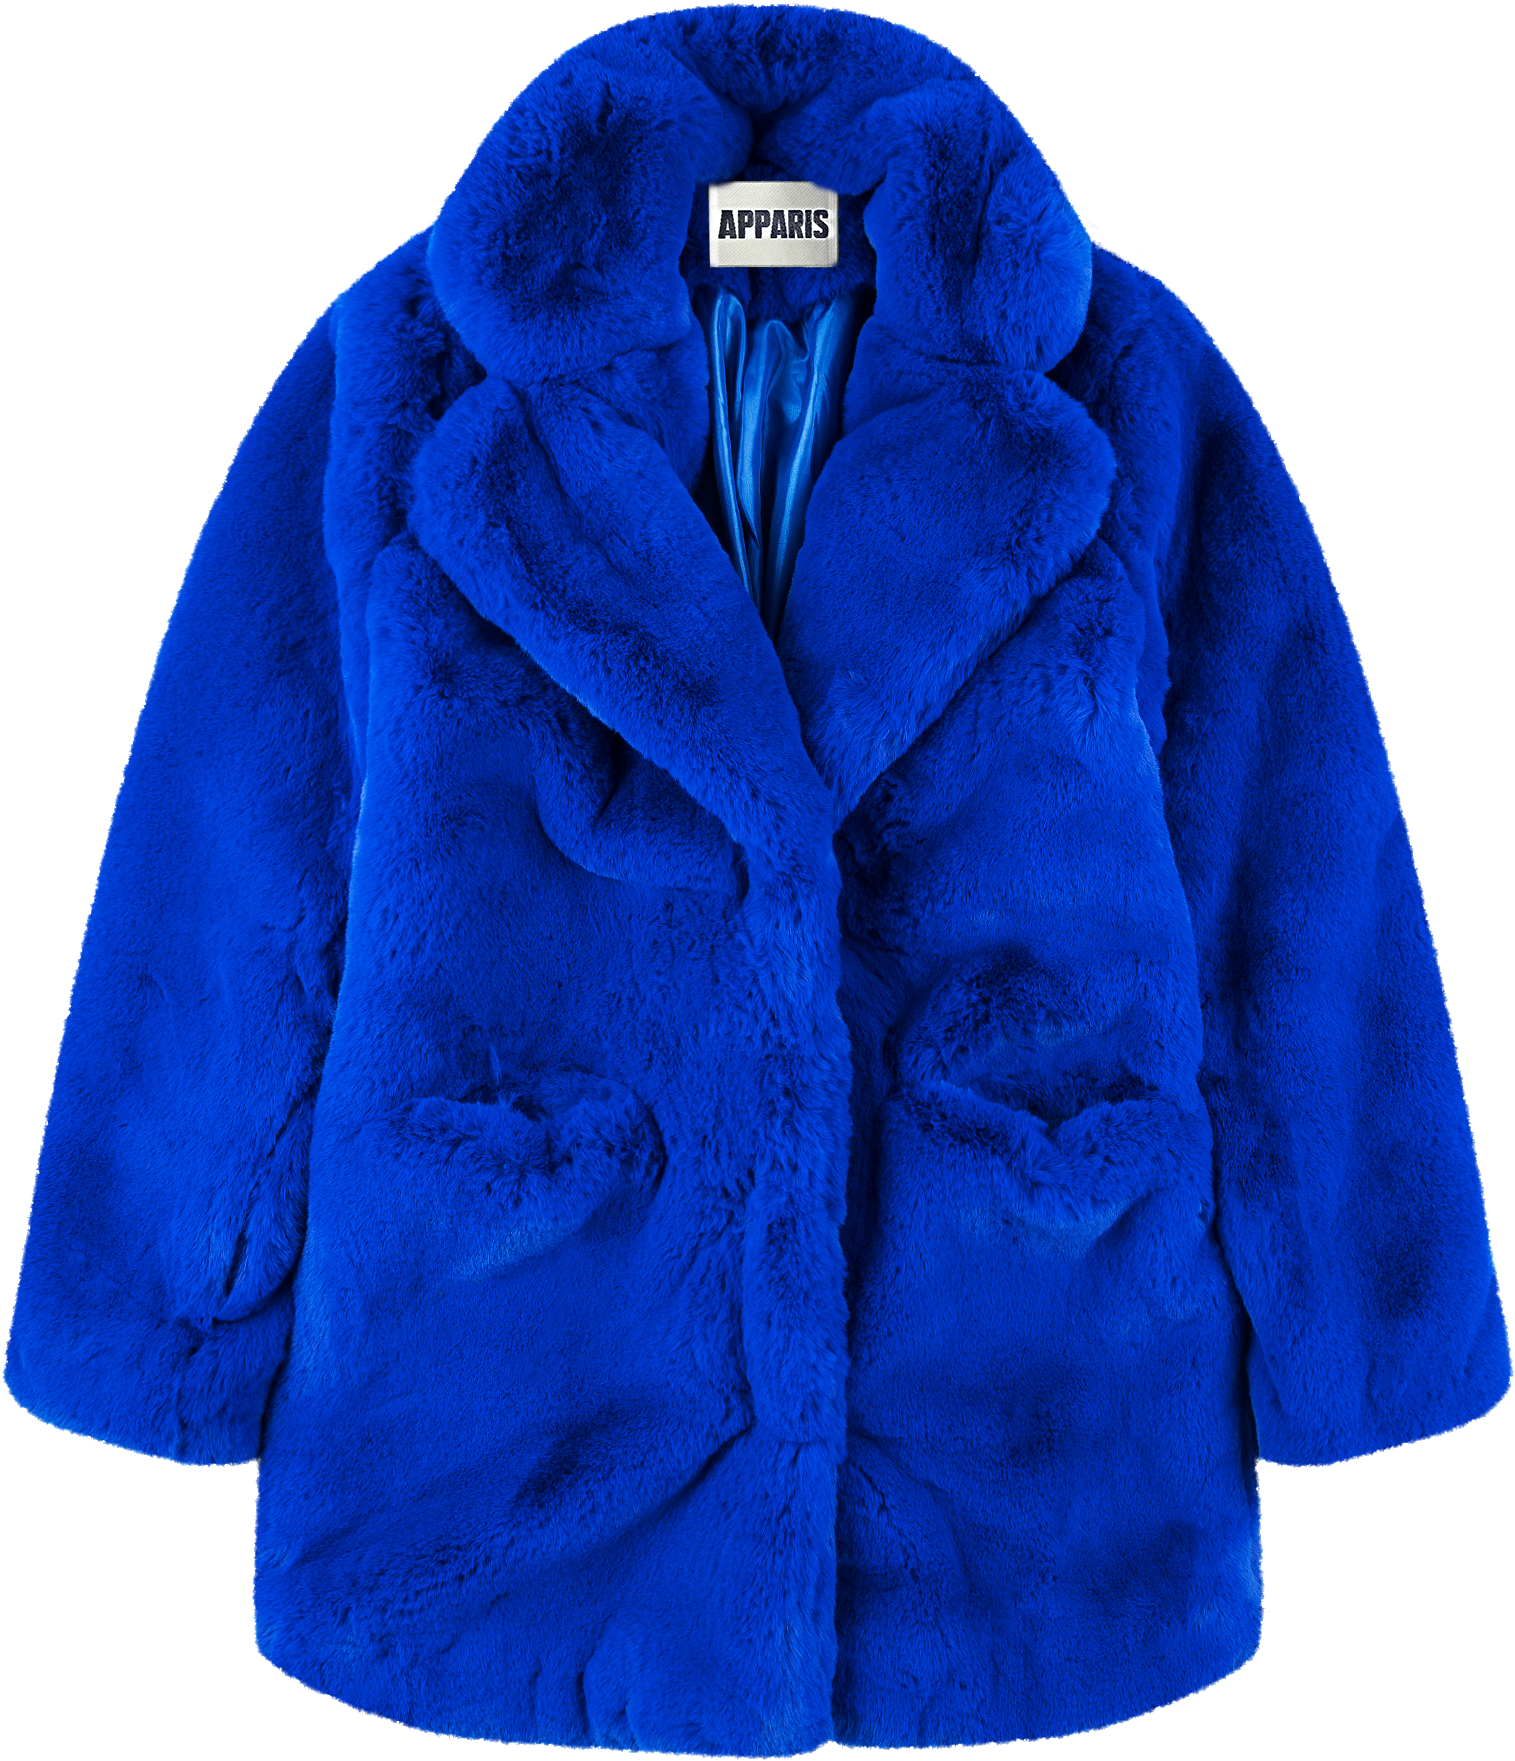 A Blue Fur Coat On A Swinger